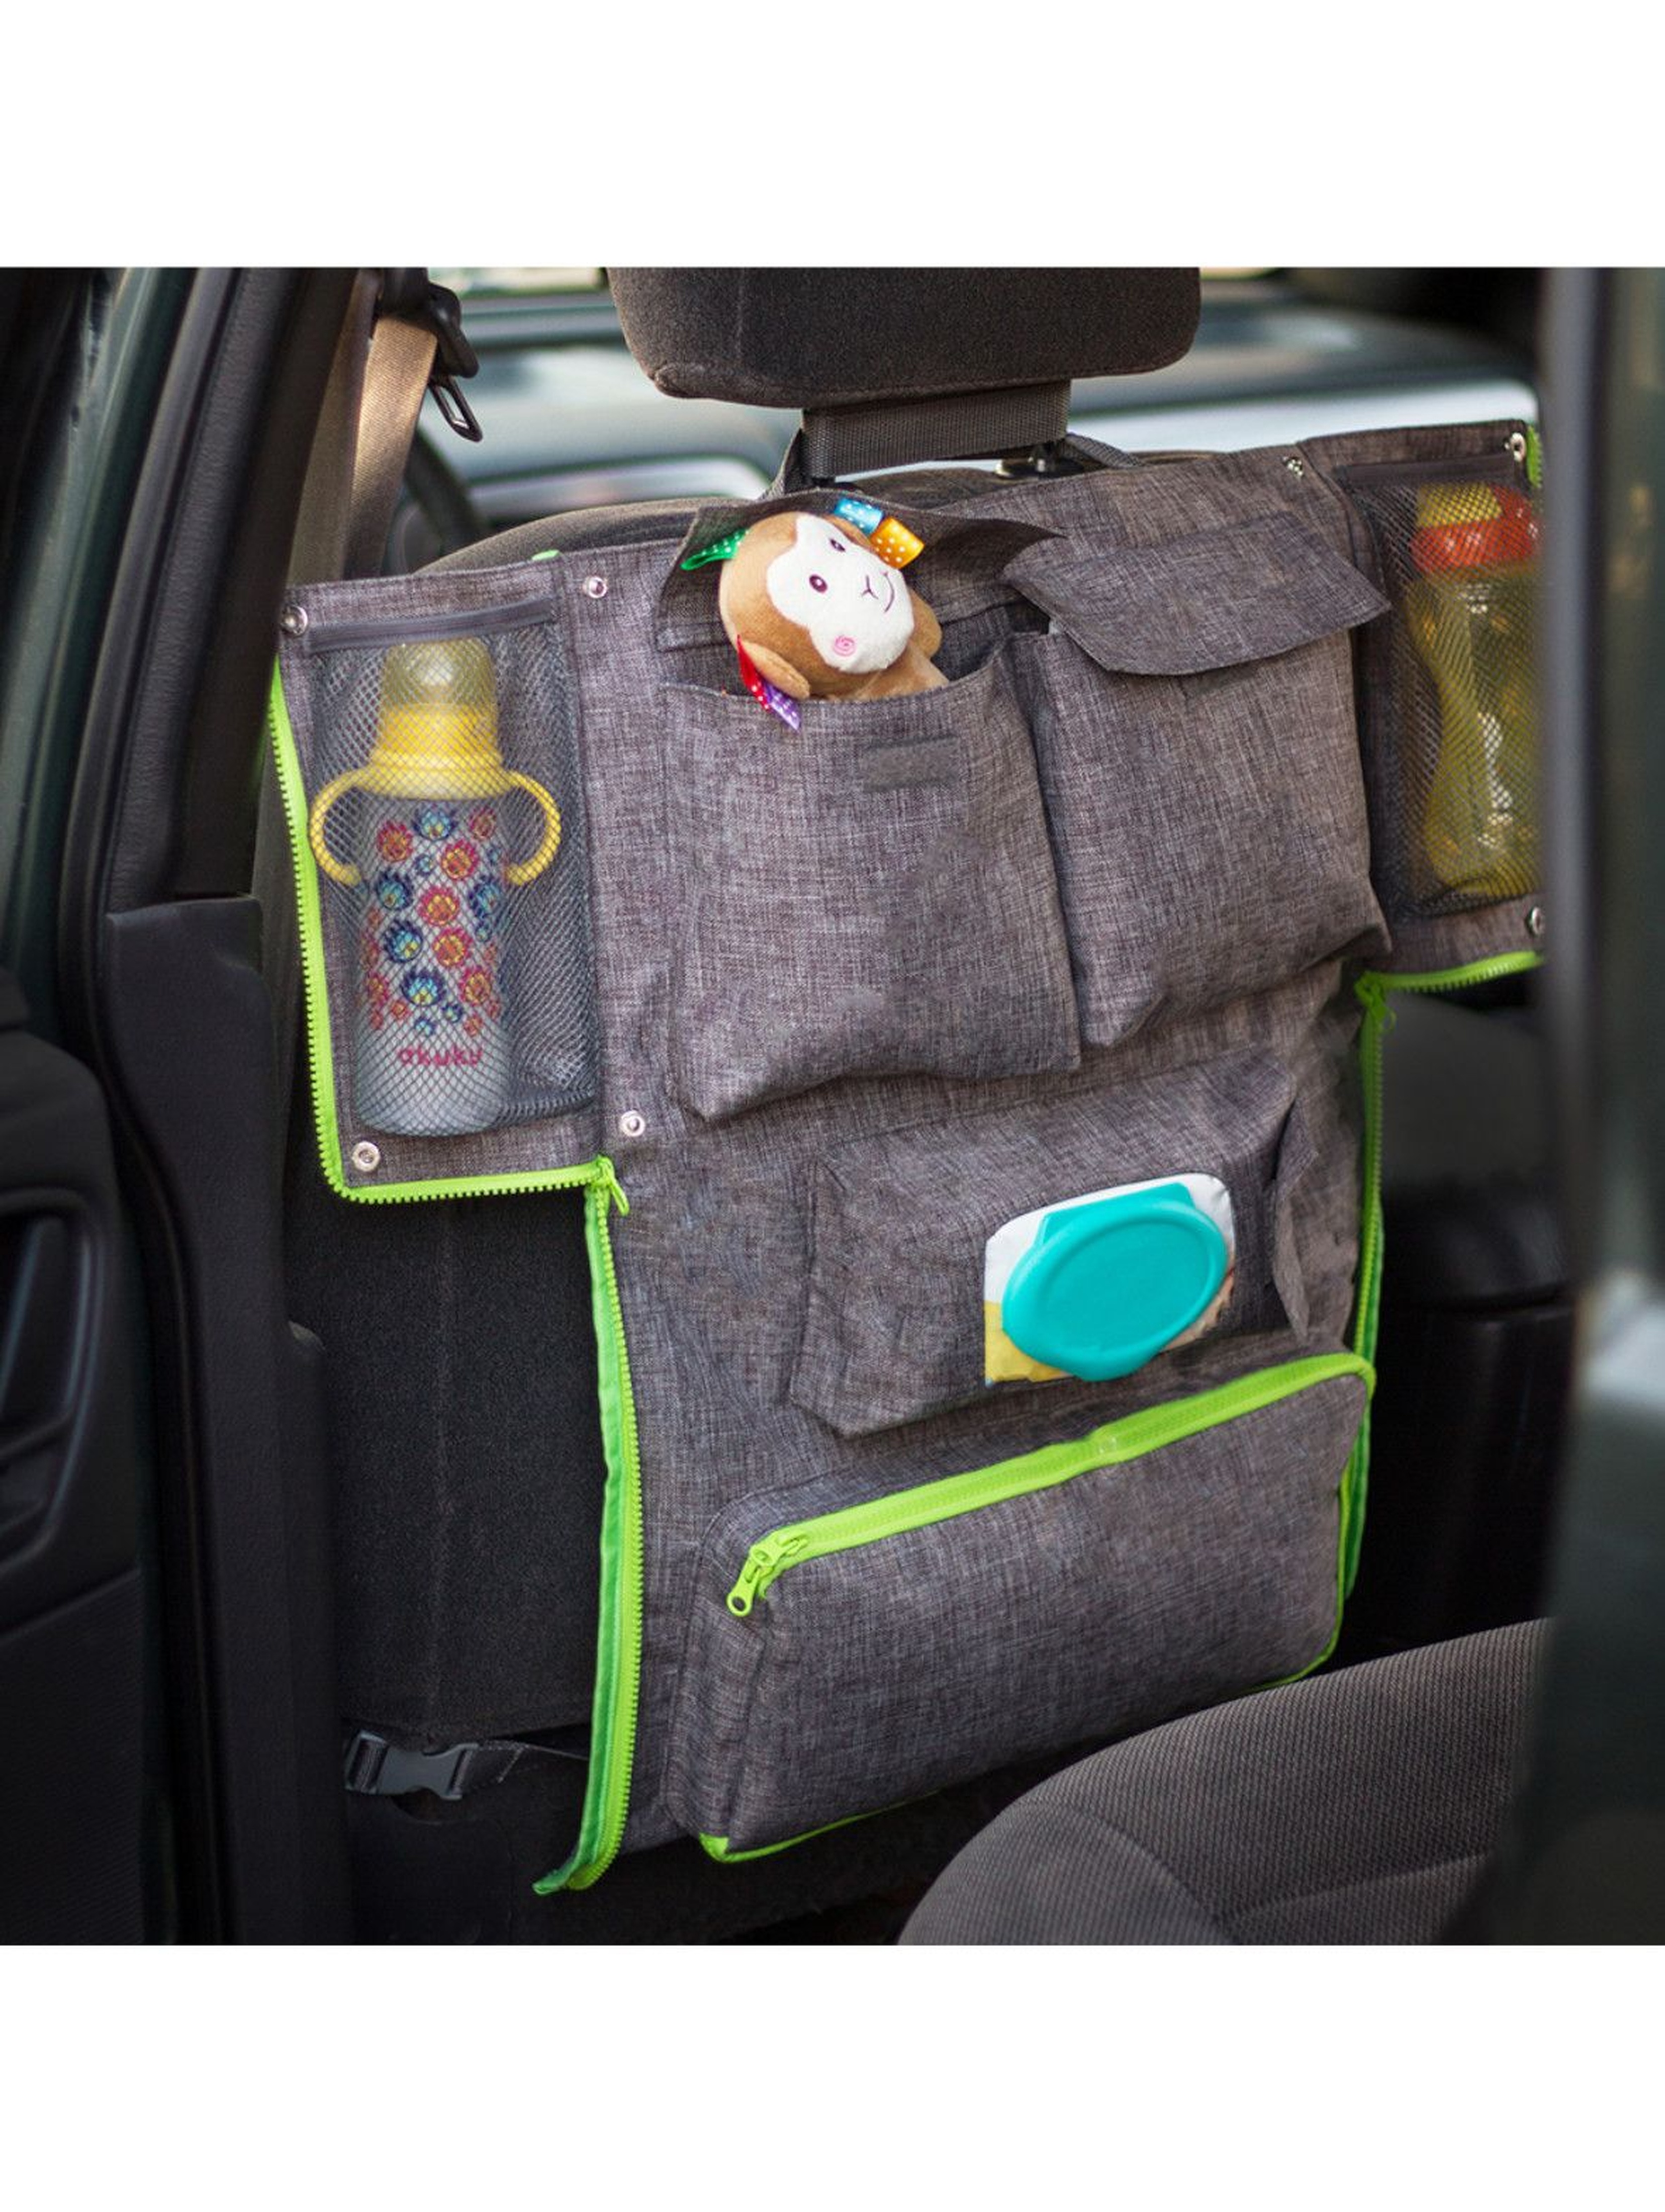 Torba / Organizer samochodowy Clever Bag